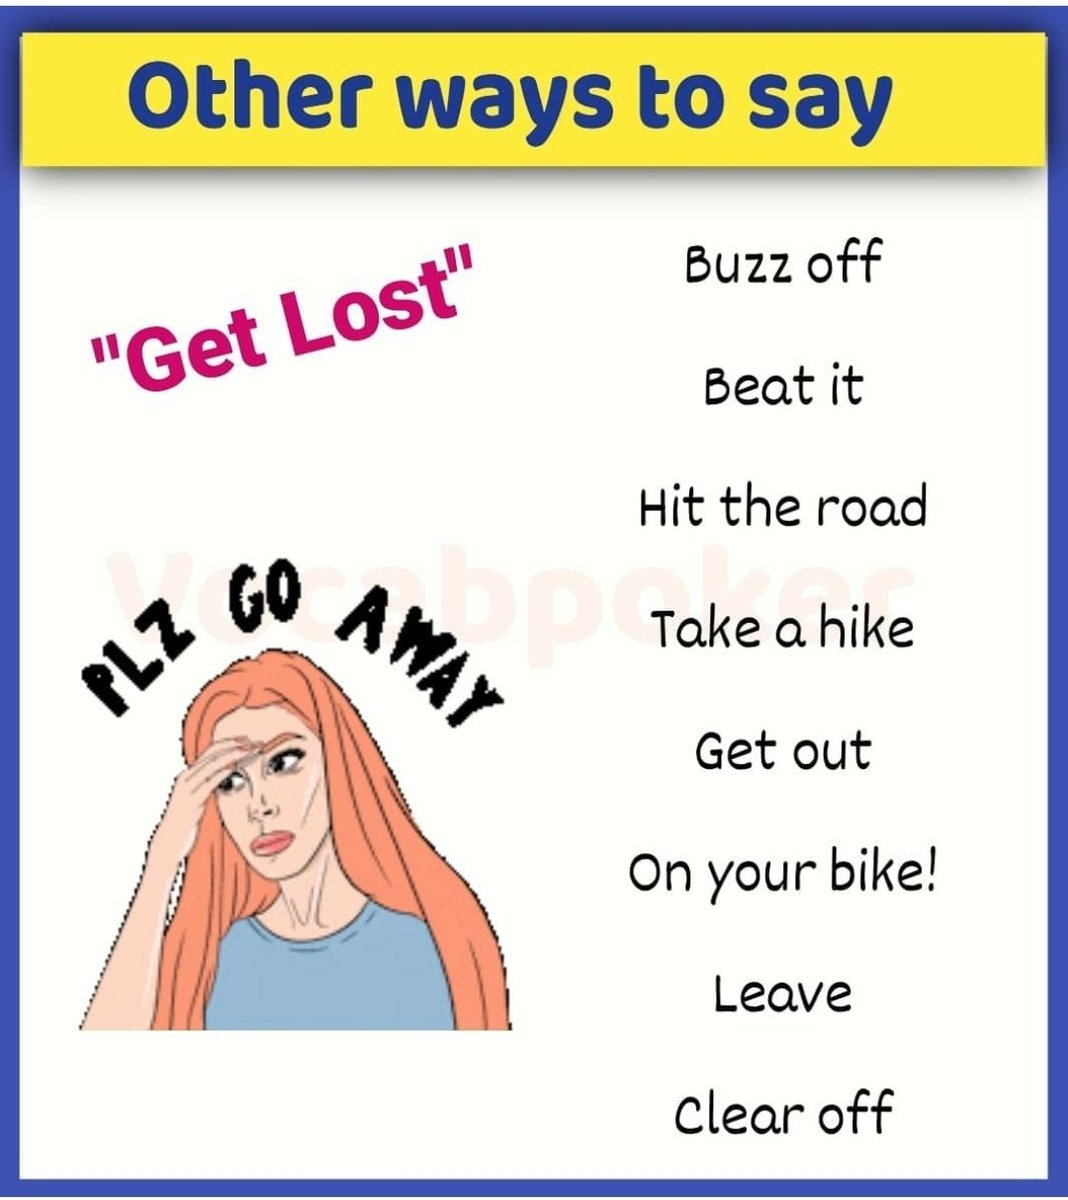 Other ways to say Get lost

#vocabpoker 

#englishvocabulary #esl #eslteacher #studyenglish #englishexpressions #englishproverbs  #ingilizce #angielski #englishwords #ieltsprep #tofel  #ingilizceogren #basitingilizce #vocab #vocabulary #english #getlost #buzzoff #goaway